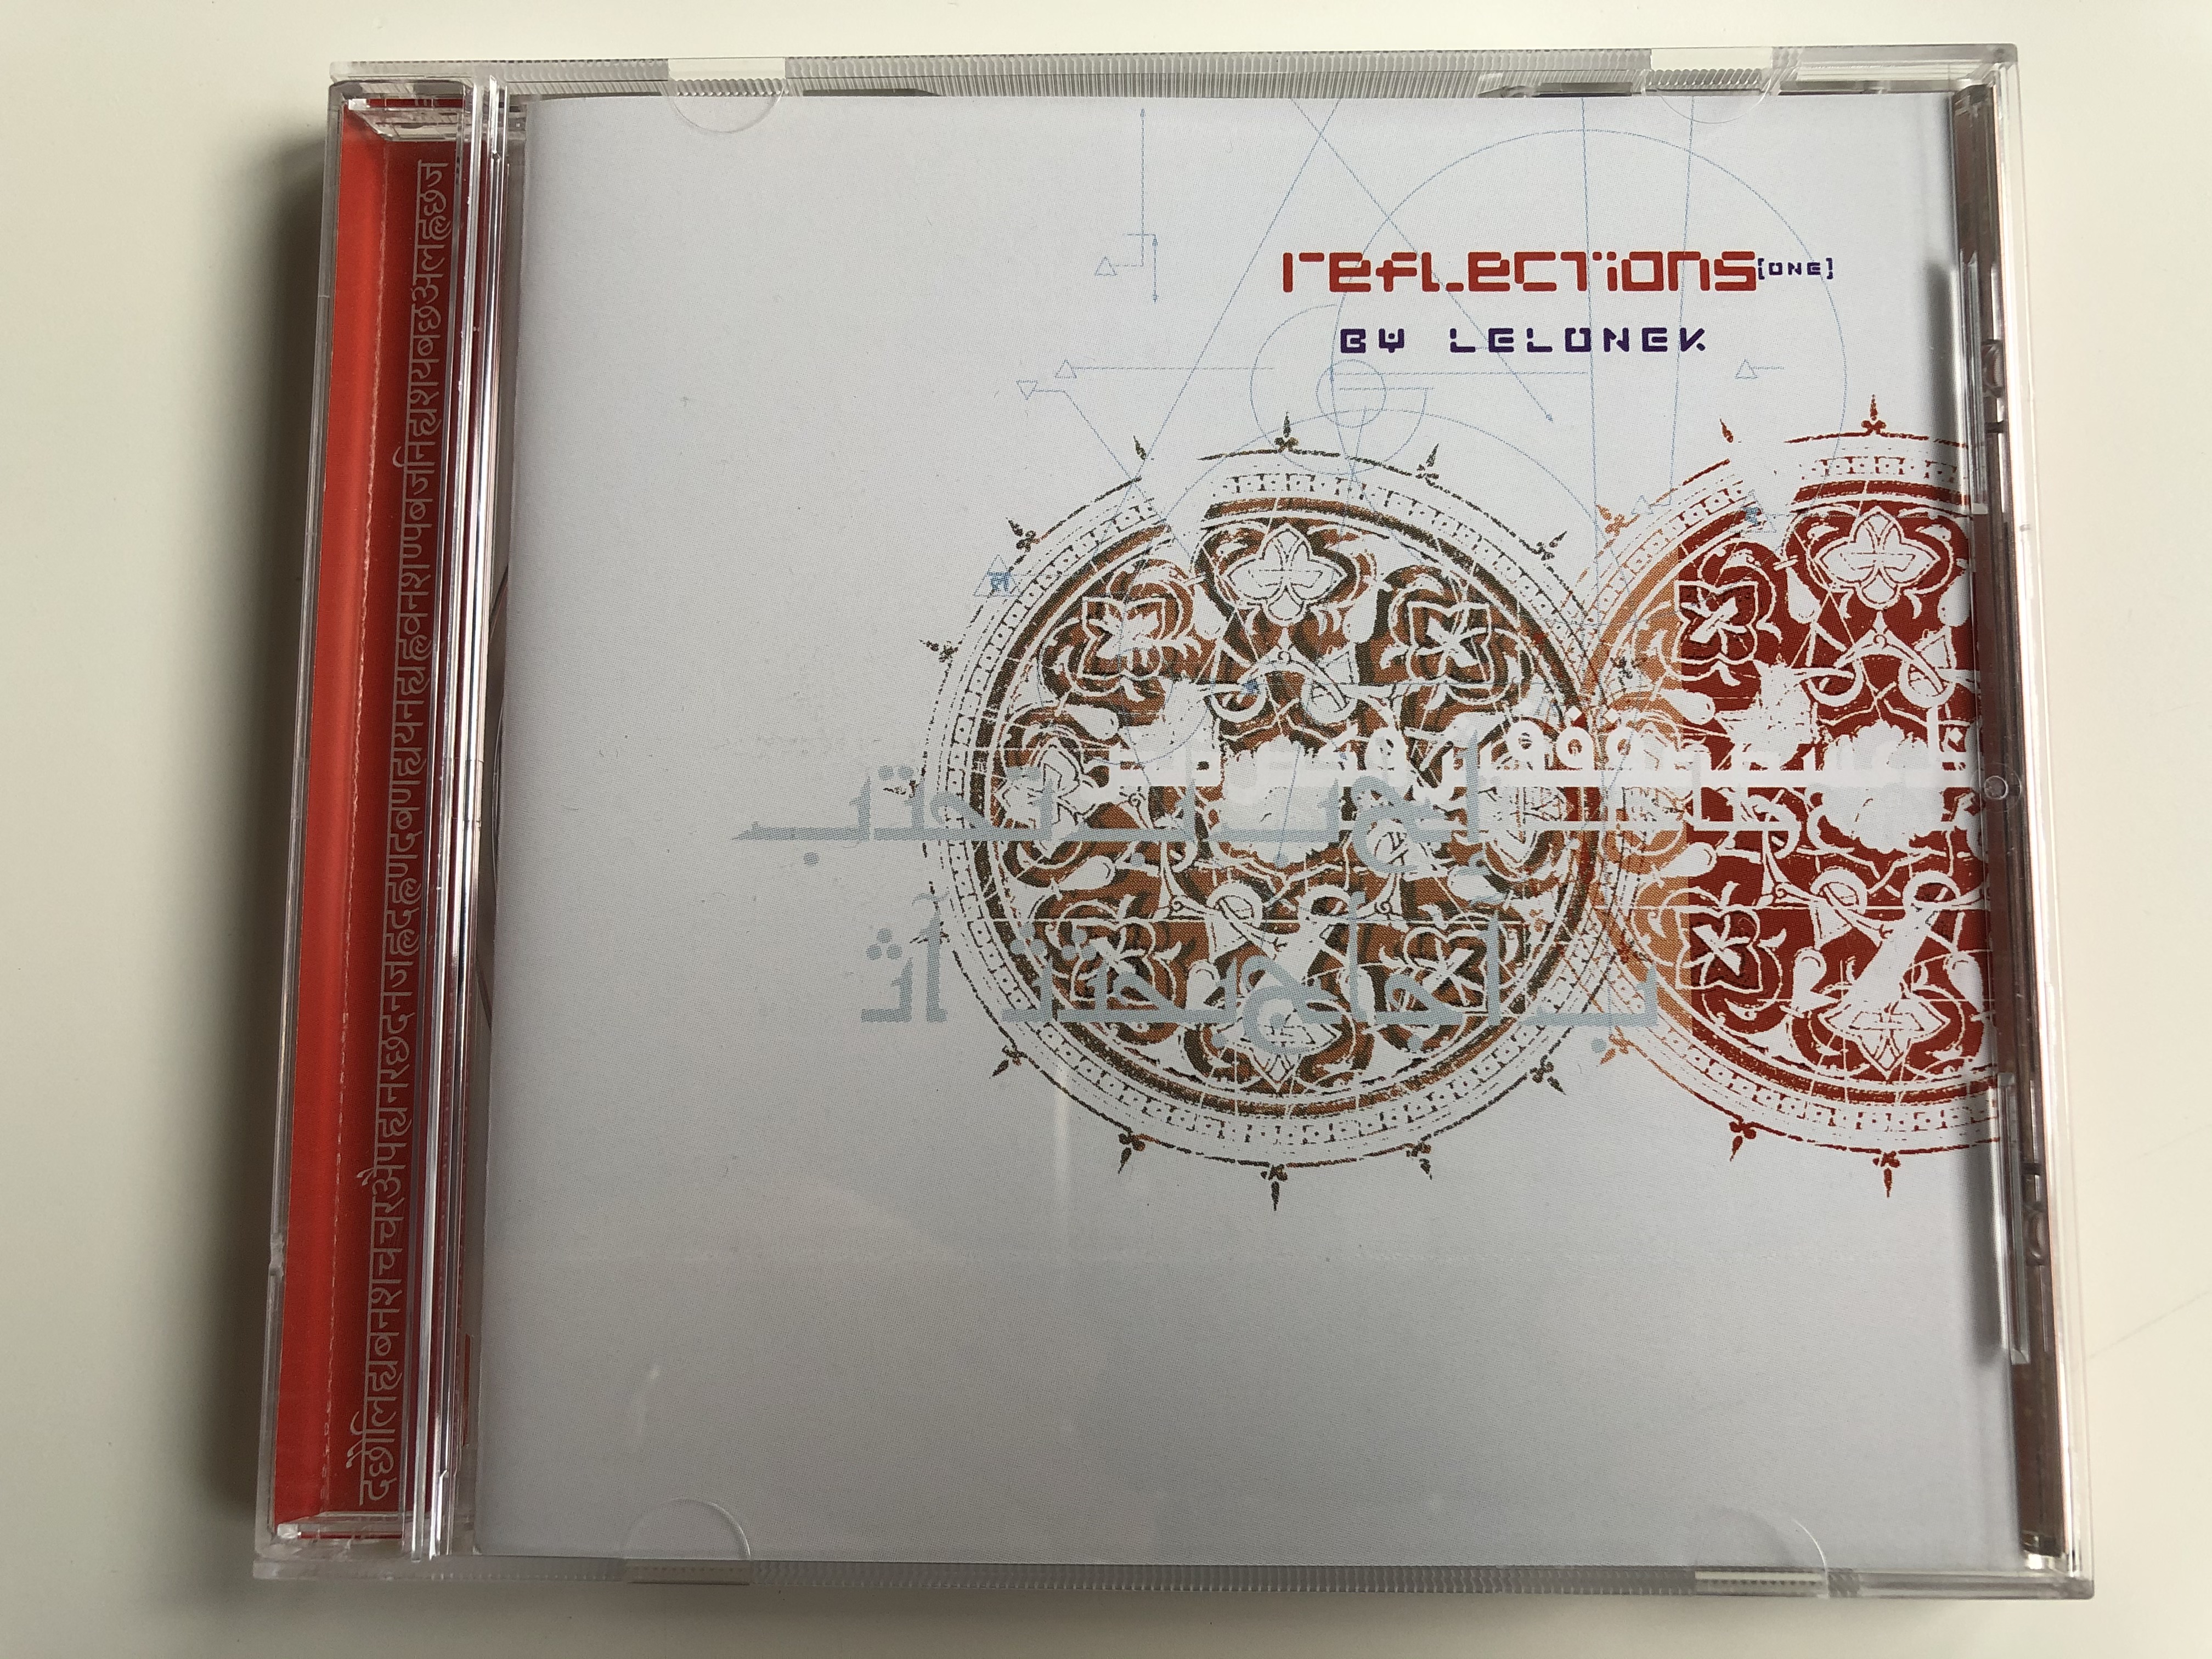 reflections-one-by-lelonek-aquarius-international-music-audio-cd-aq0096-1-.jpg